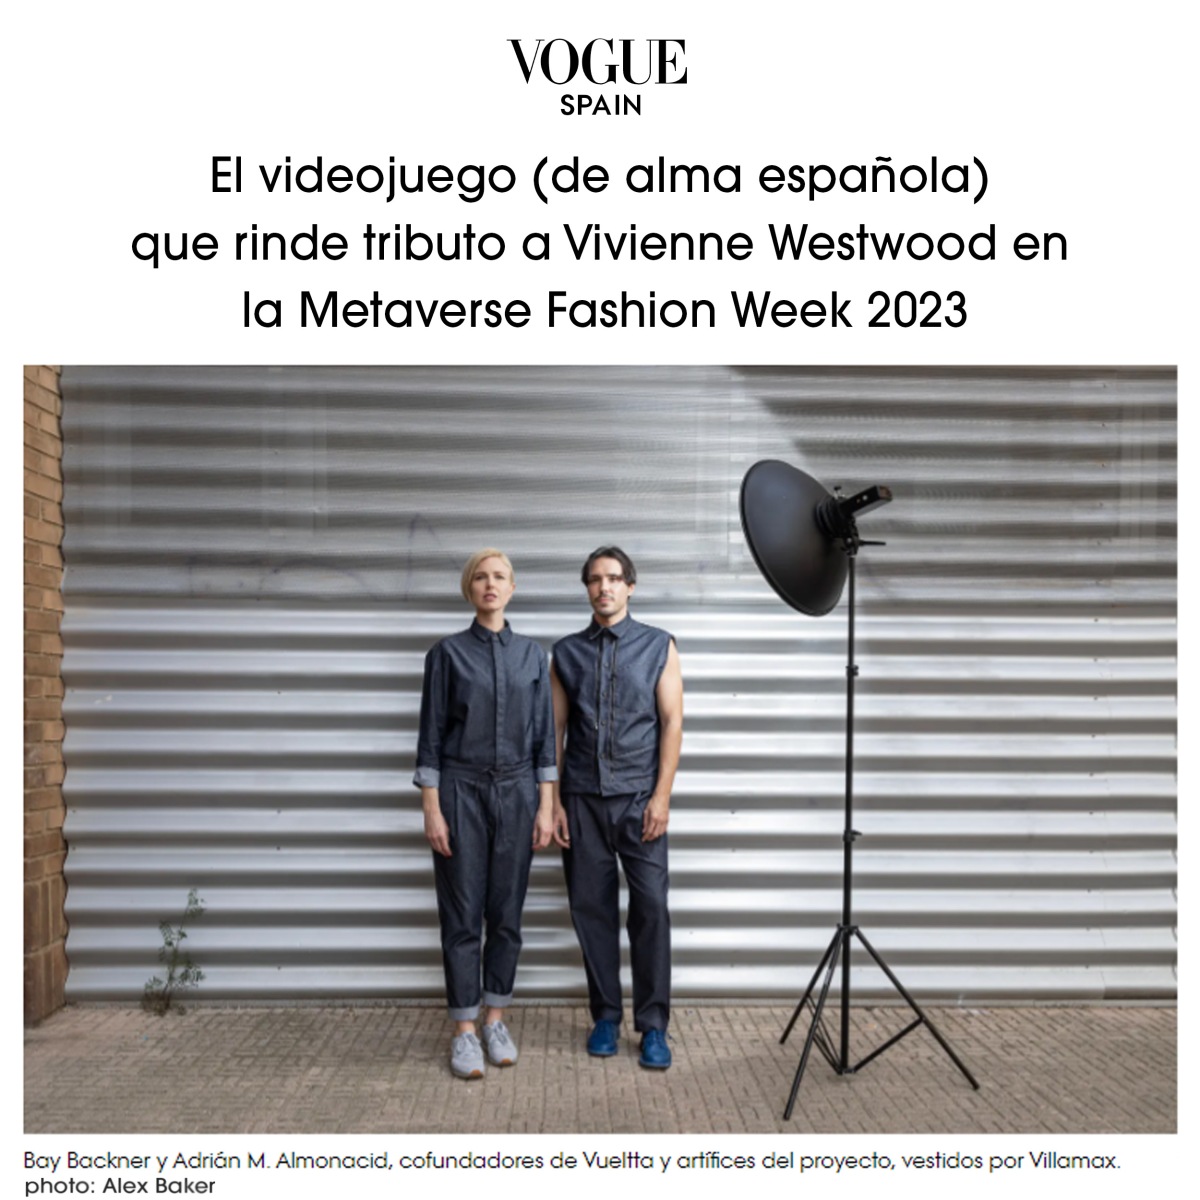 Vogue interviews Bay Backner and Adrián Martínez about their work with Vueltta